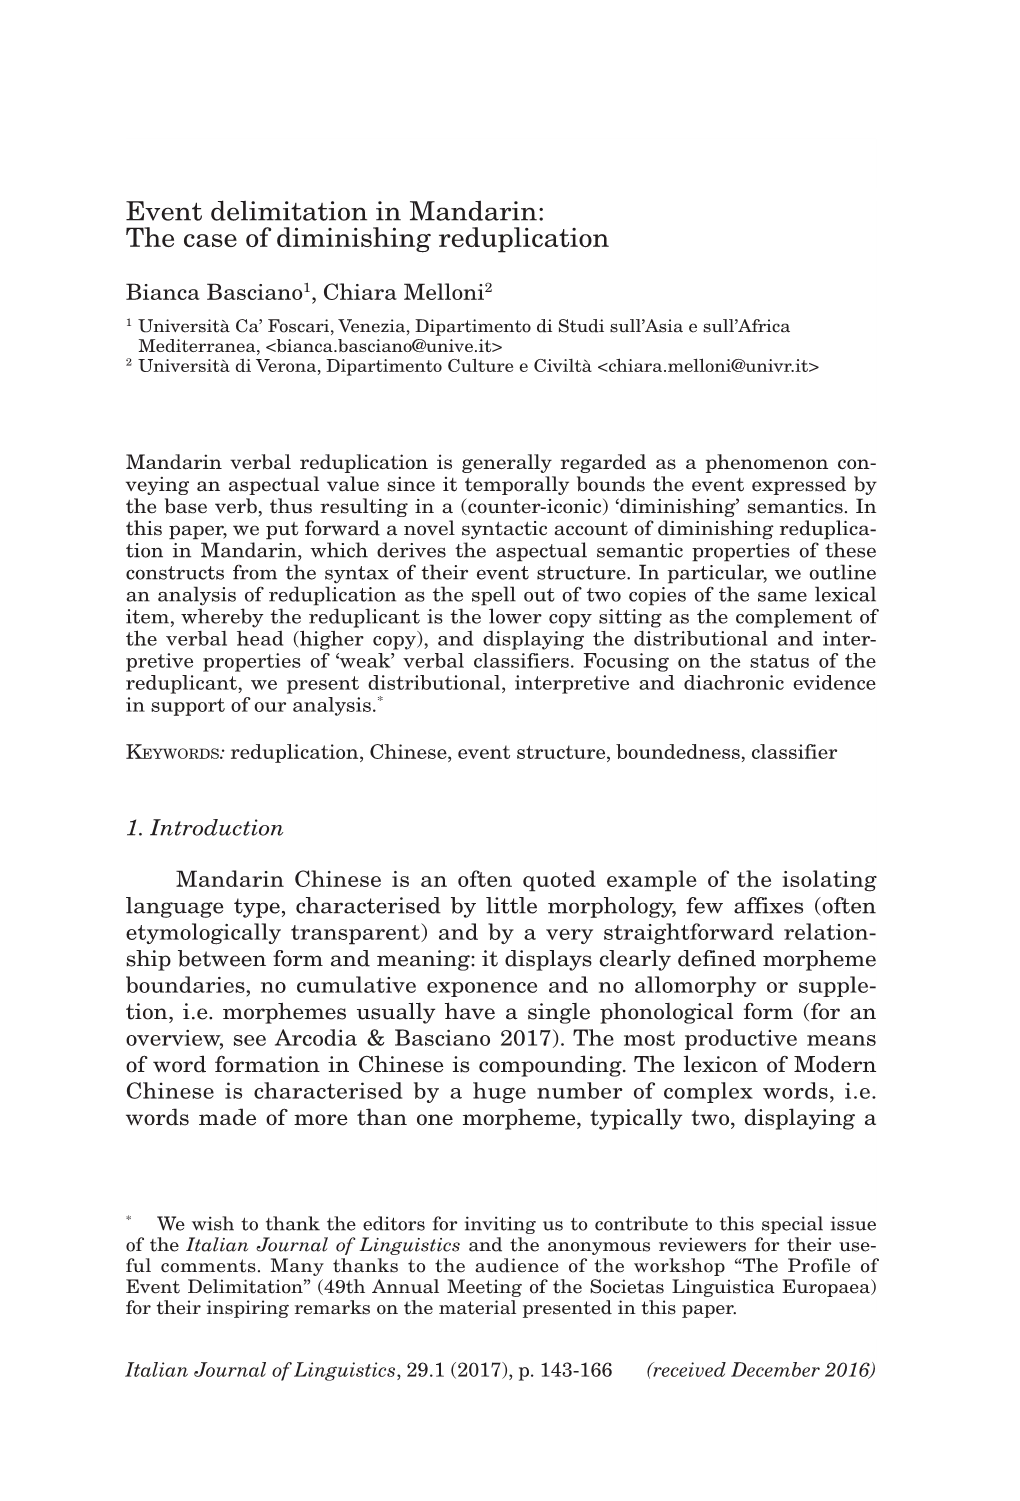 Event Delimitation in Mandarin: the Case of Diminishing Reduplication